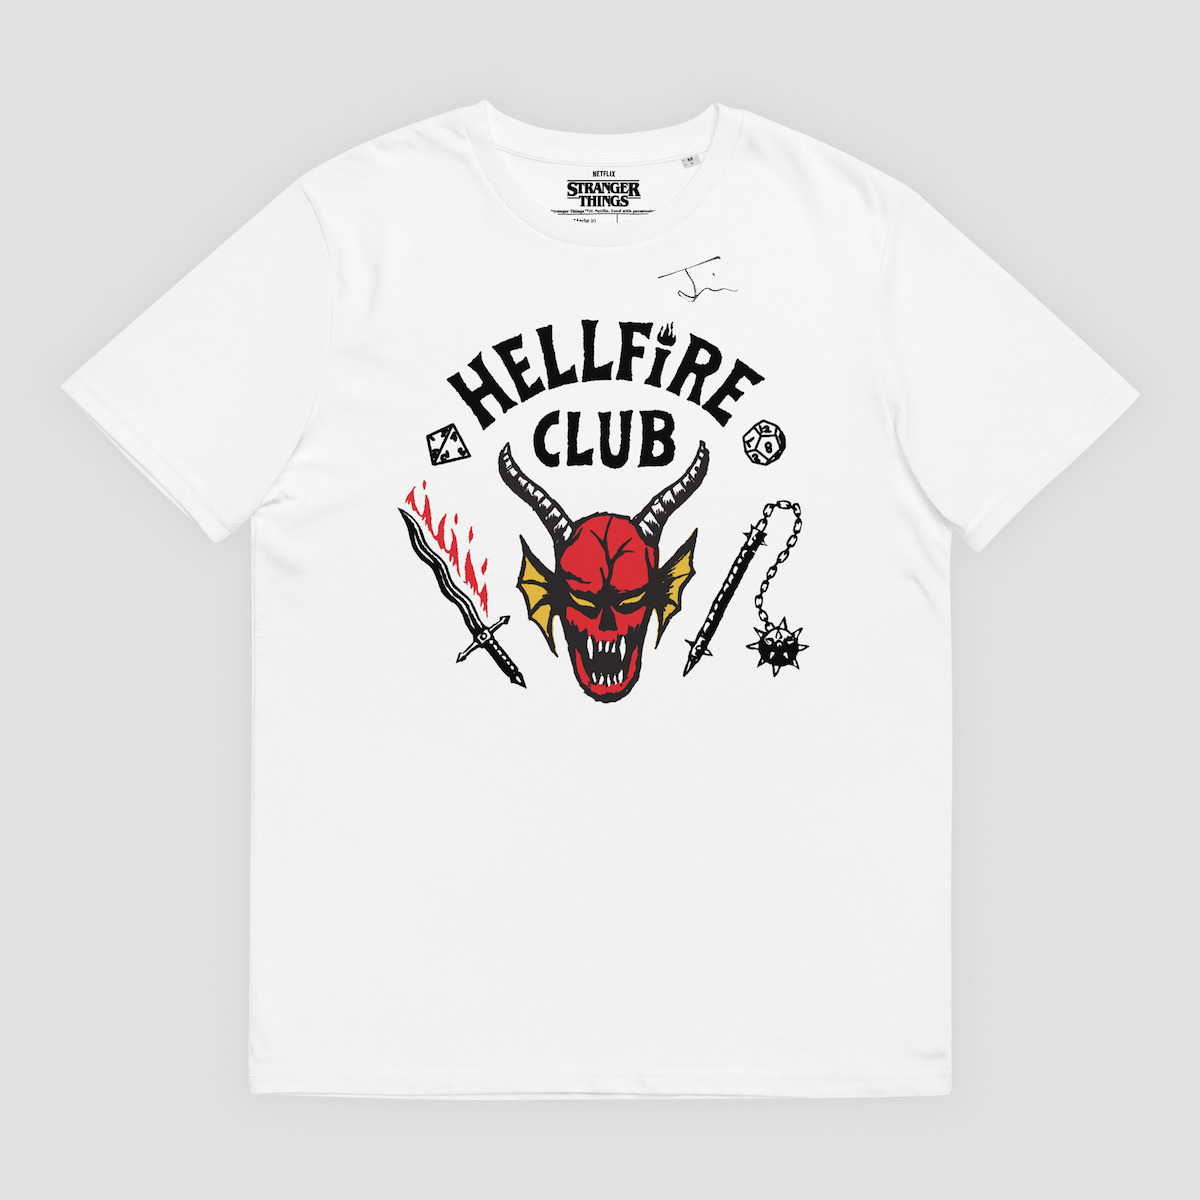 Win A Signed Hellfire Club Shirt From Eddie Munson Himself, Joe Quinn